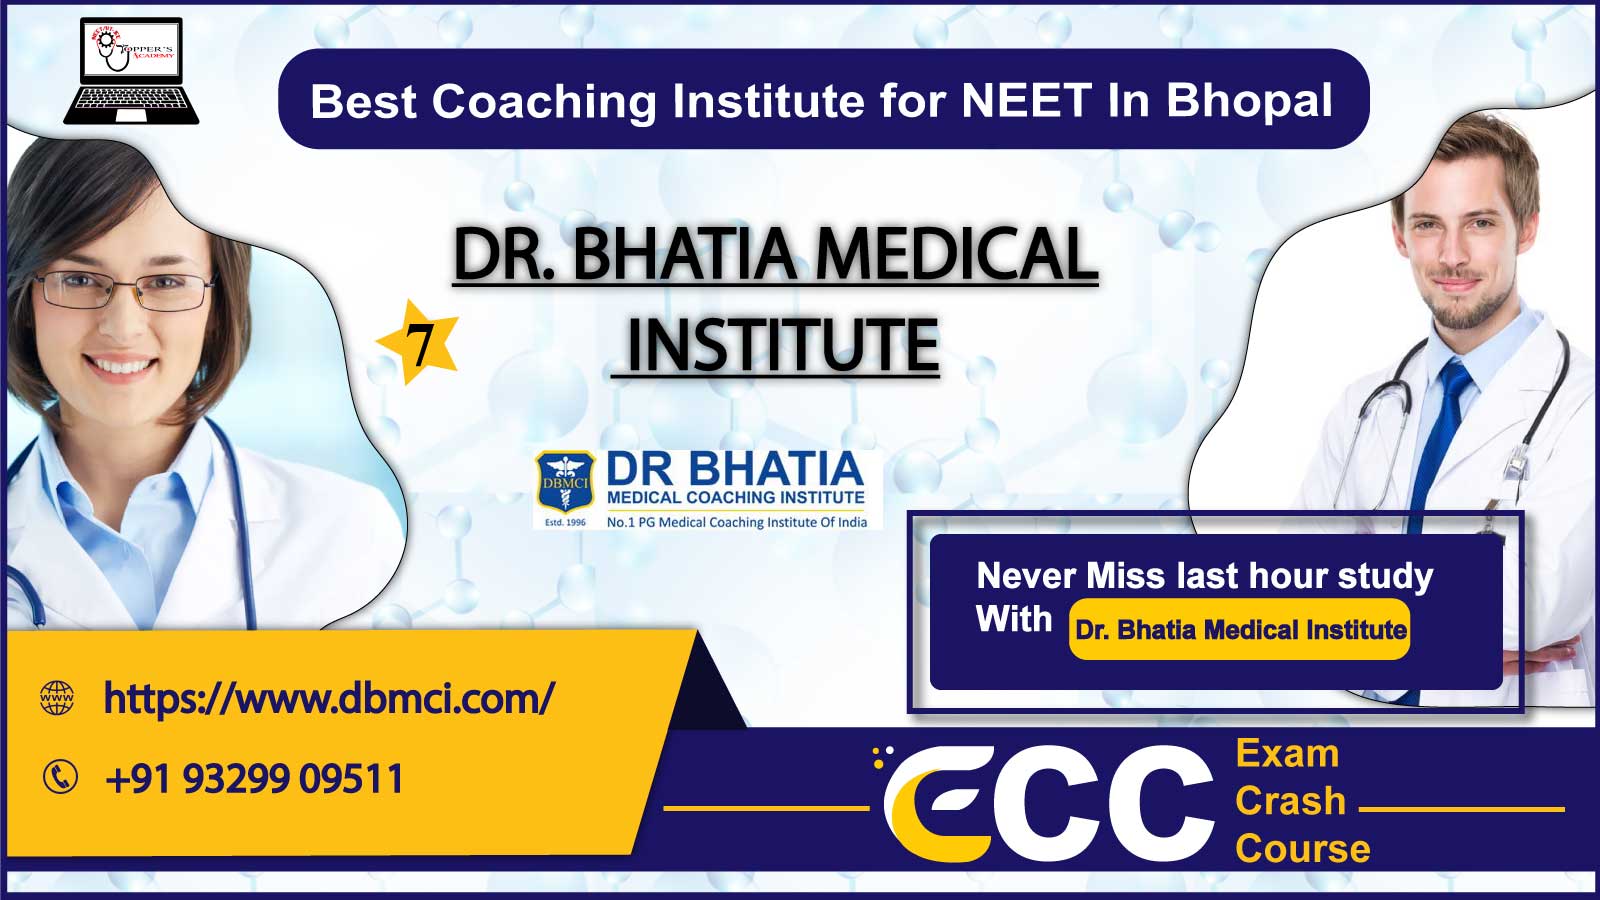 Dr. Bhatia Medical Coaching Institute In Bhopal